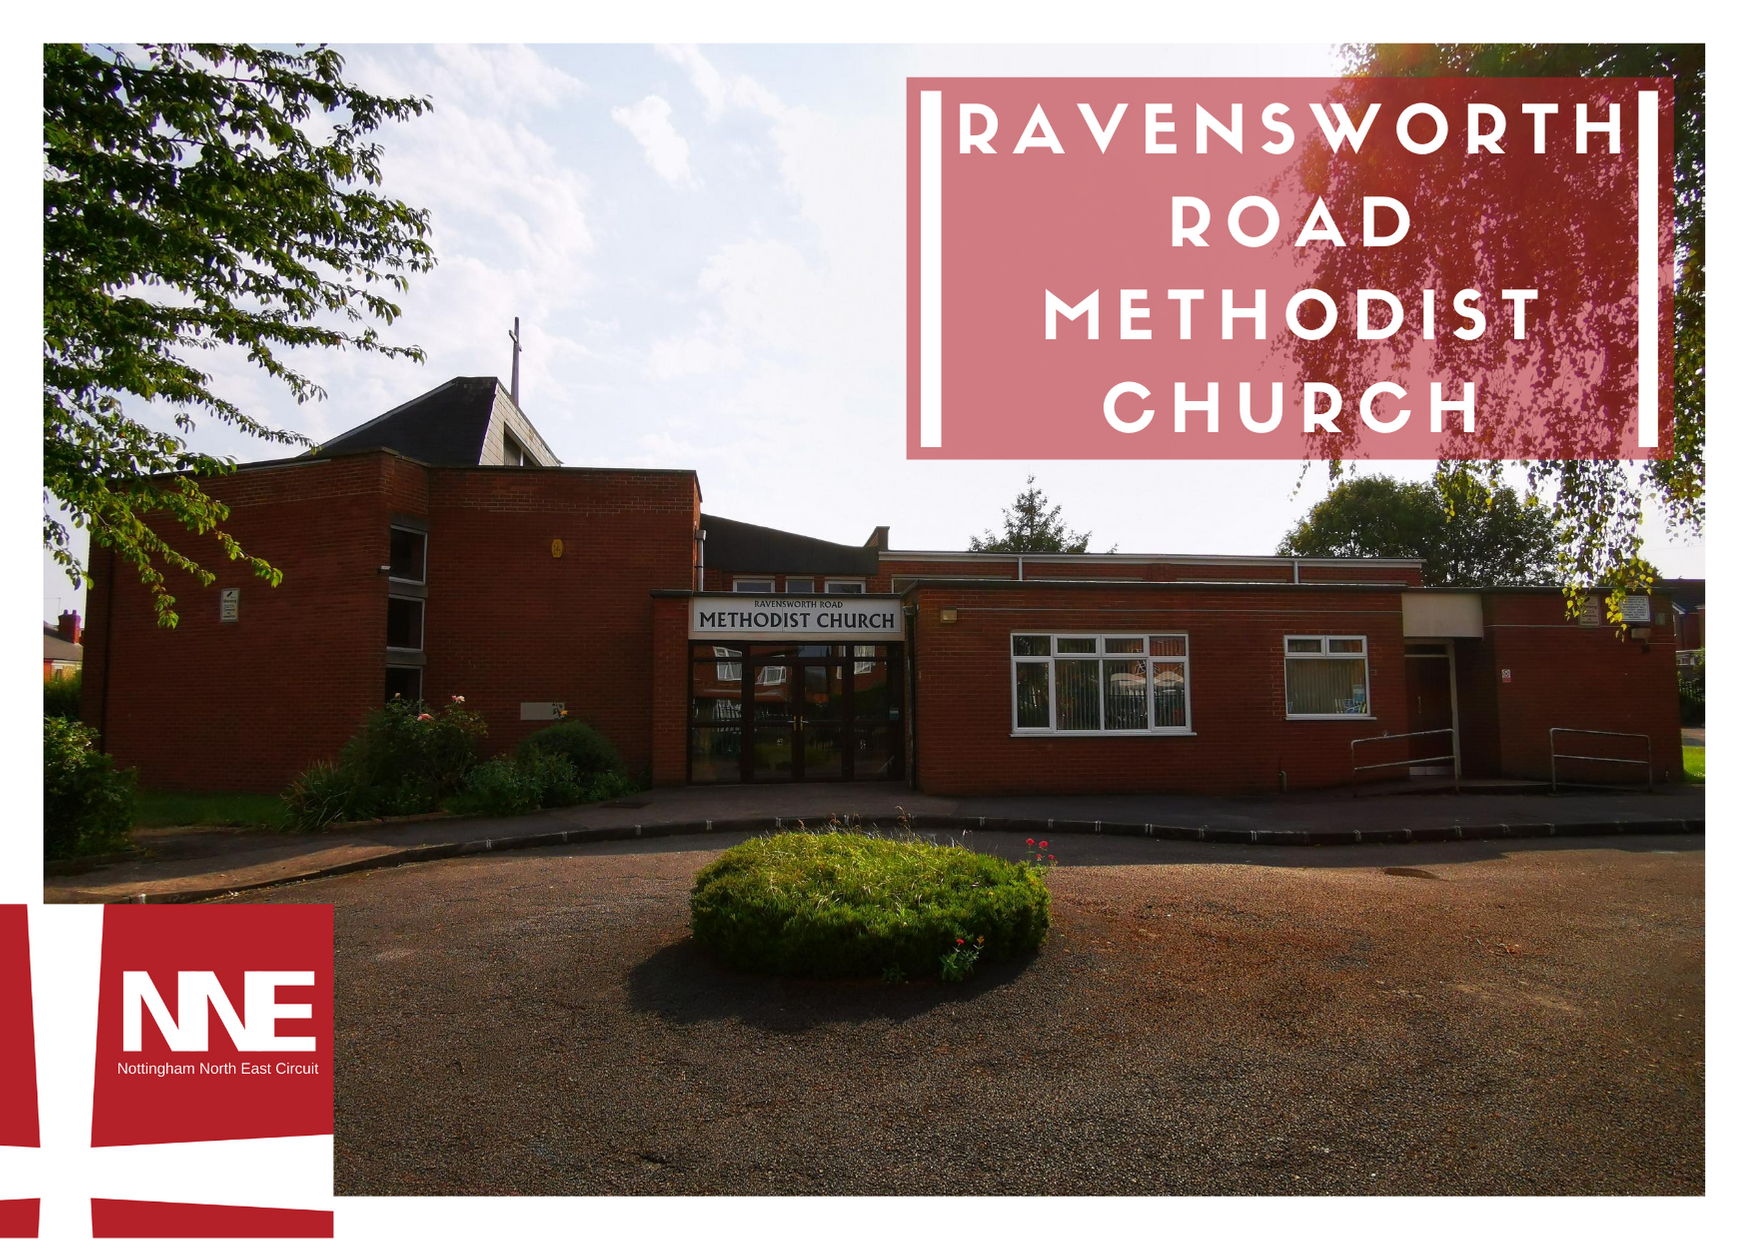 Ravensworth Road Methodist Church